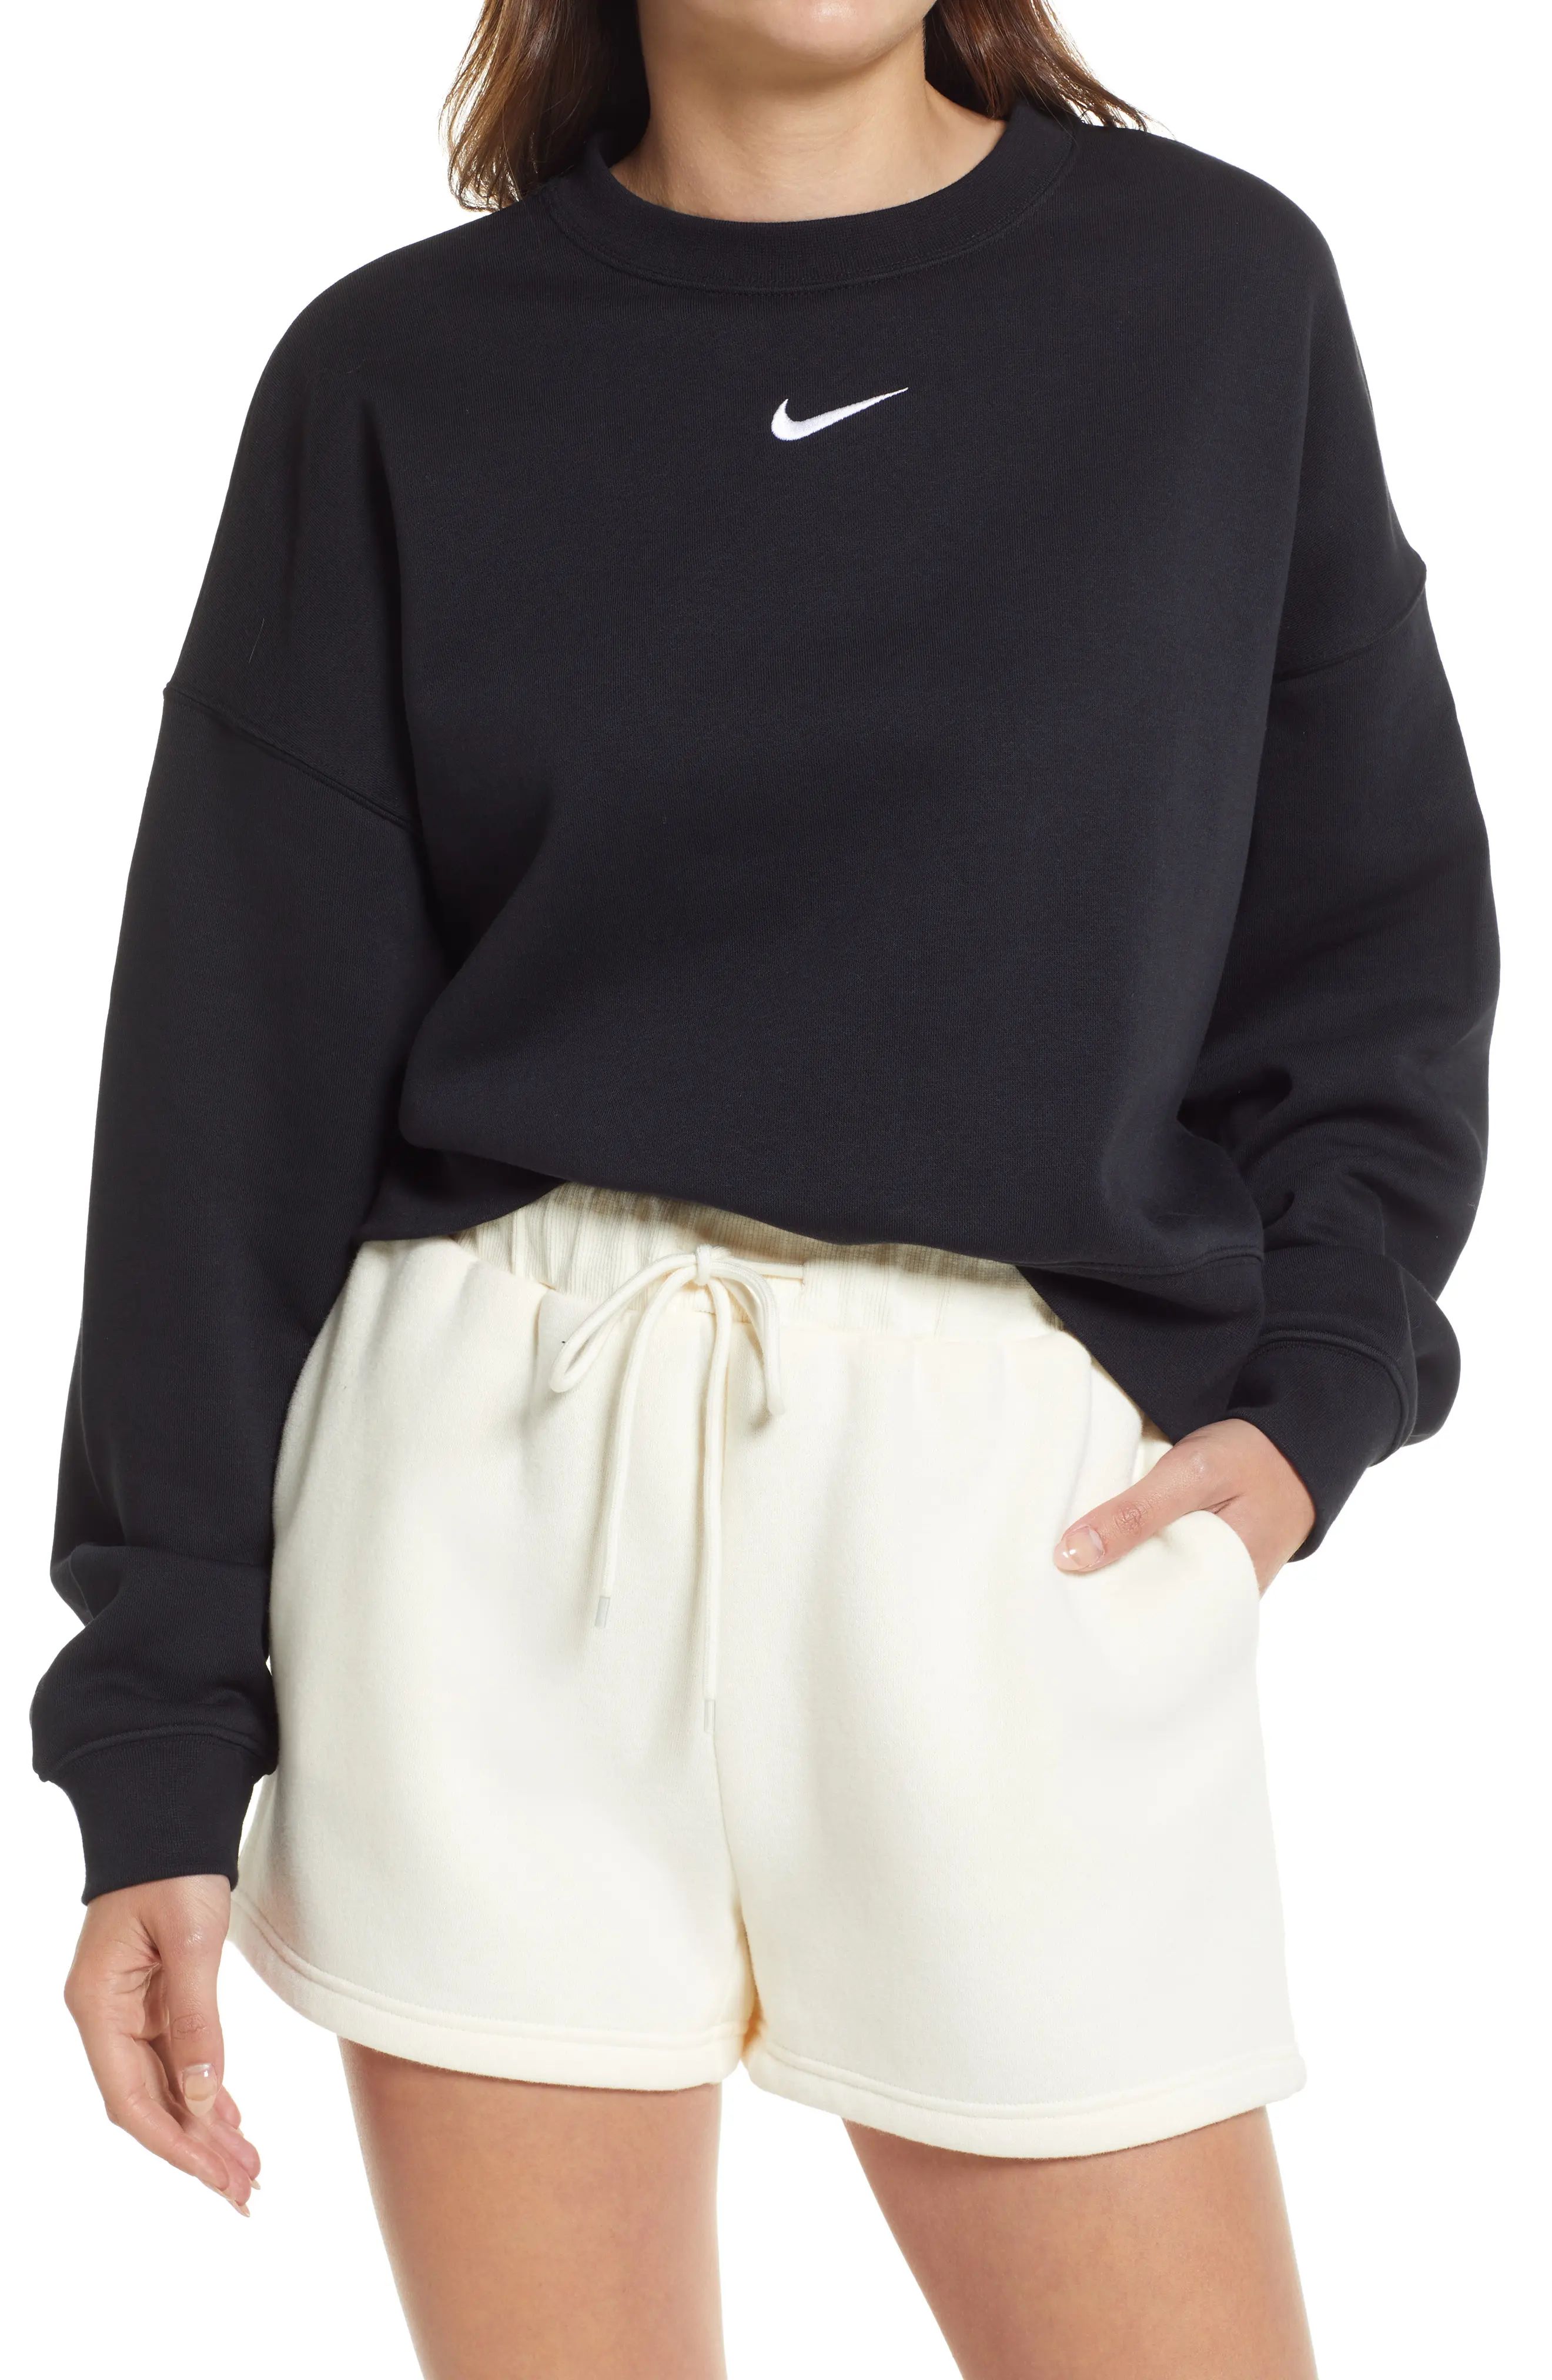 Nike Sportswear Essential Oversize Sweatshirt in Black/White at Nordstrom, Size Xx-Large | Nordstrom